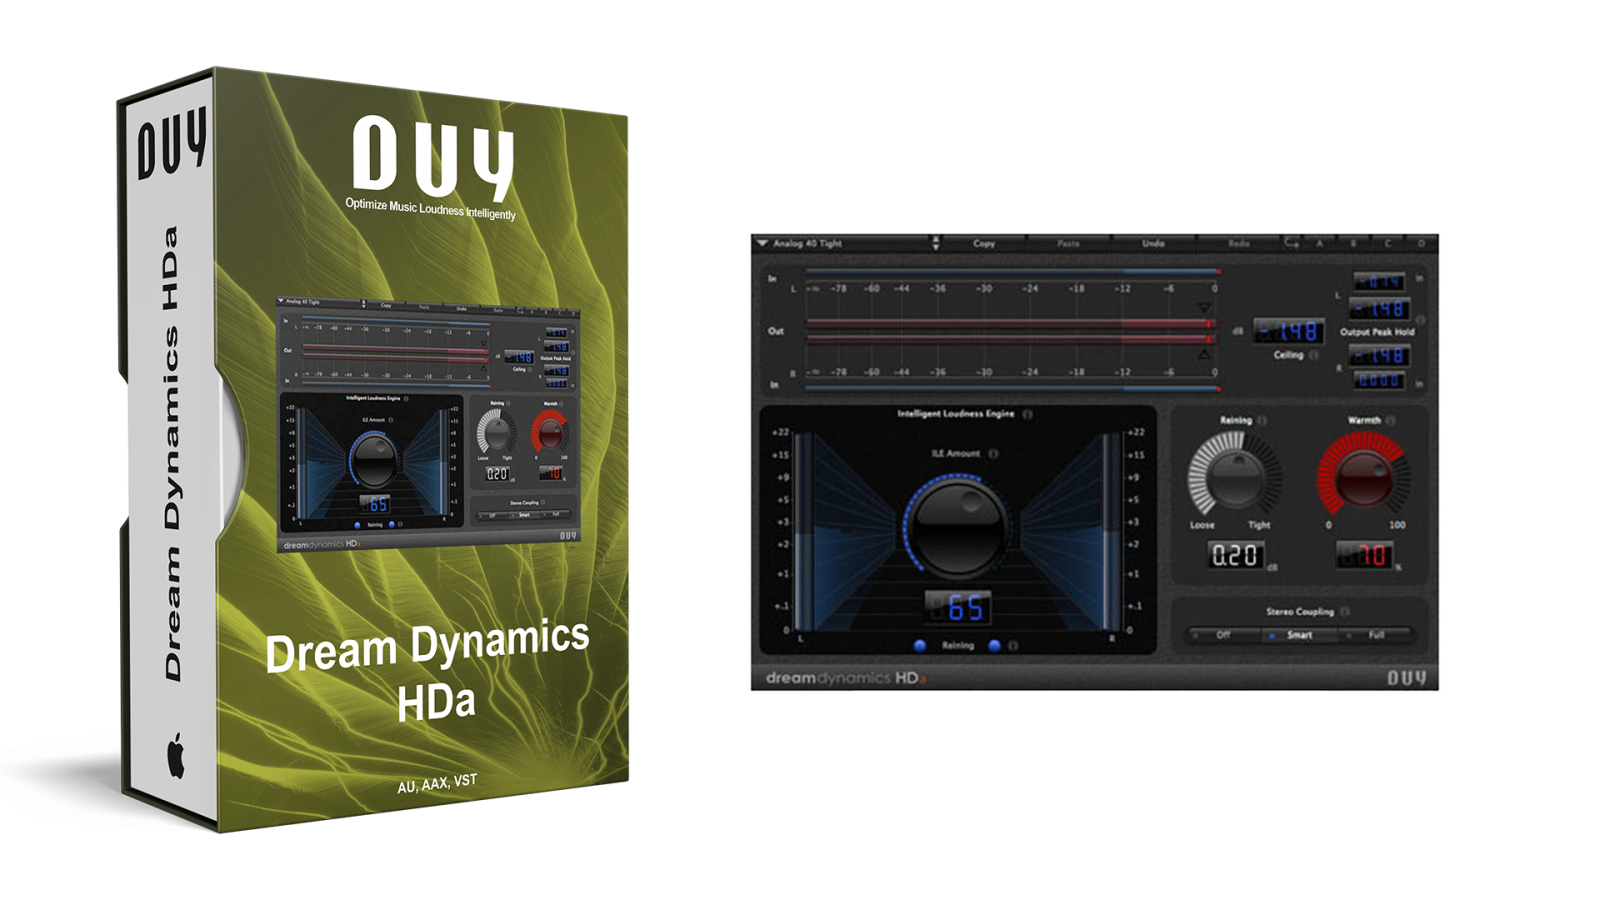 DUY Duy Dream Dynamics HDa